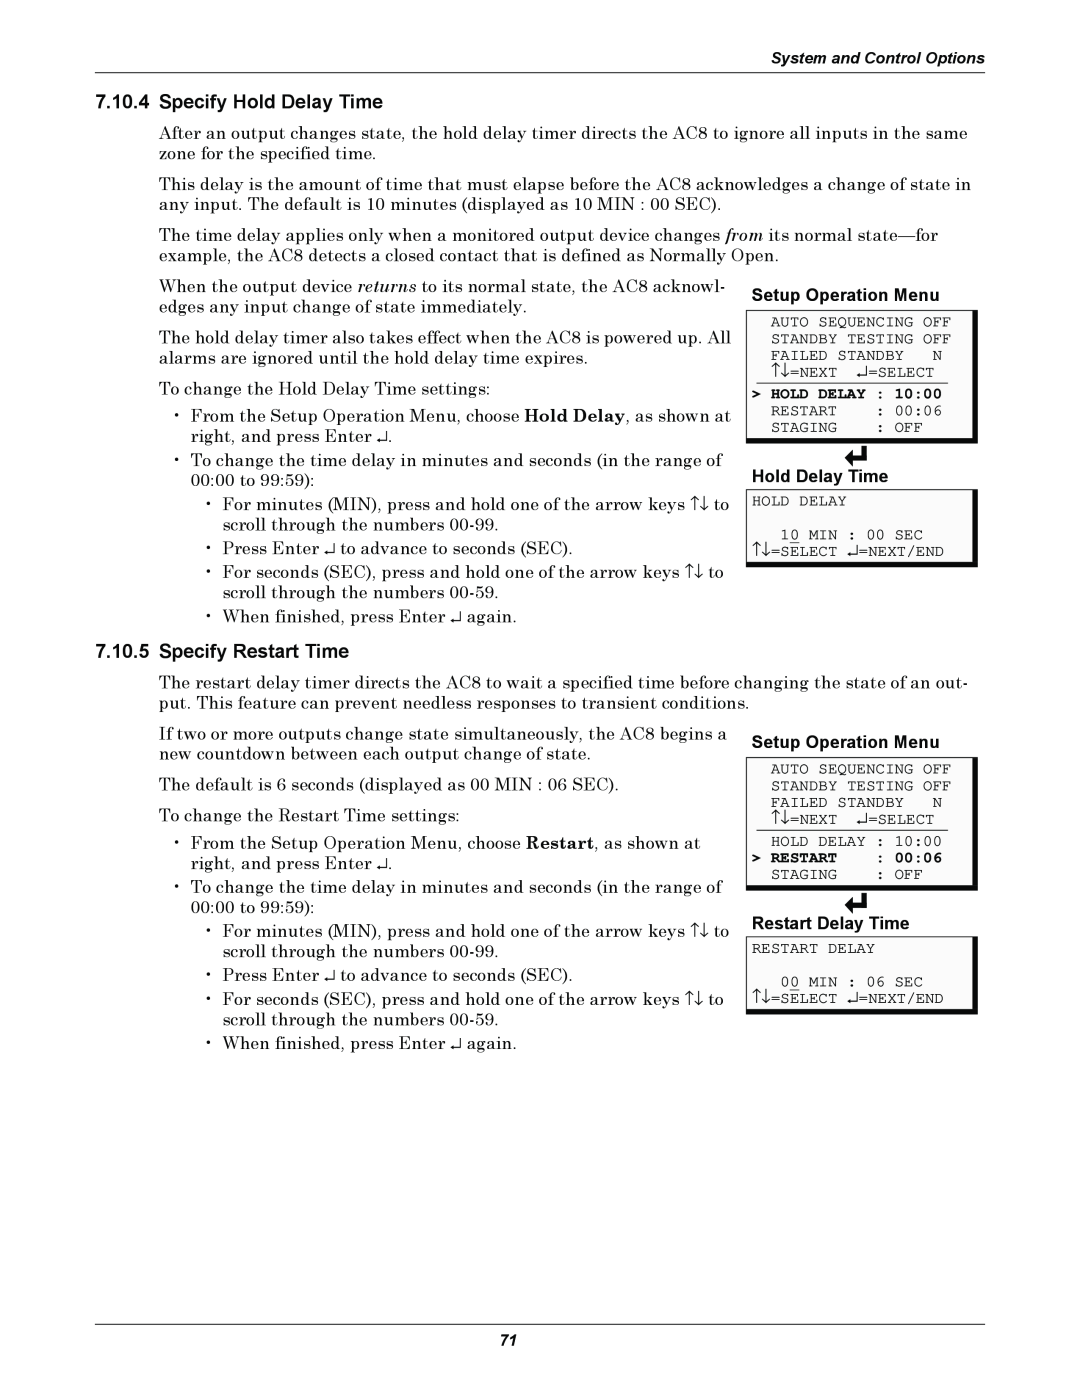 Emerson AC8 user manual 7.10.4Specify Hold Delay Time, 7.10.5Specify Restart Time, Setup Operation Menu, Restart Delay Time 